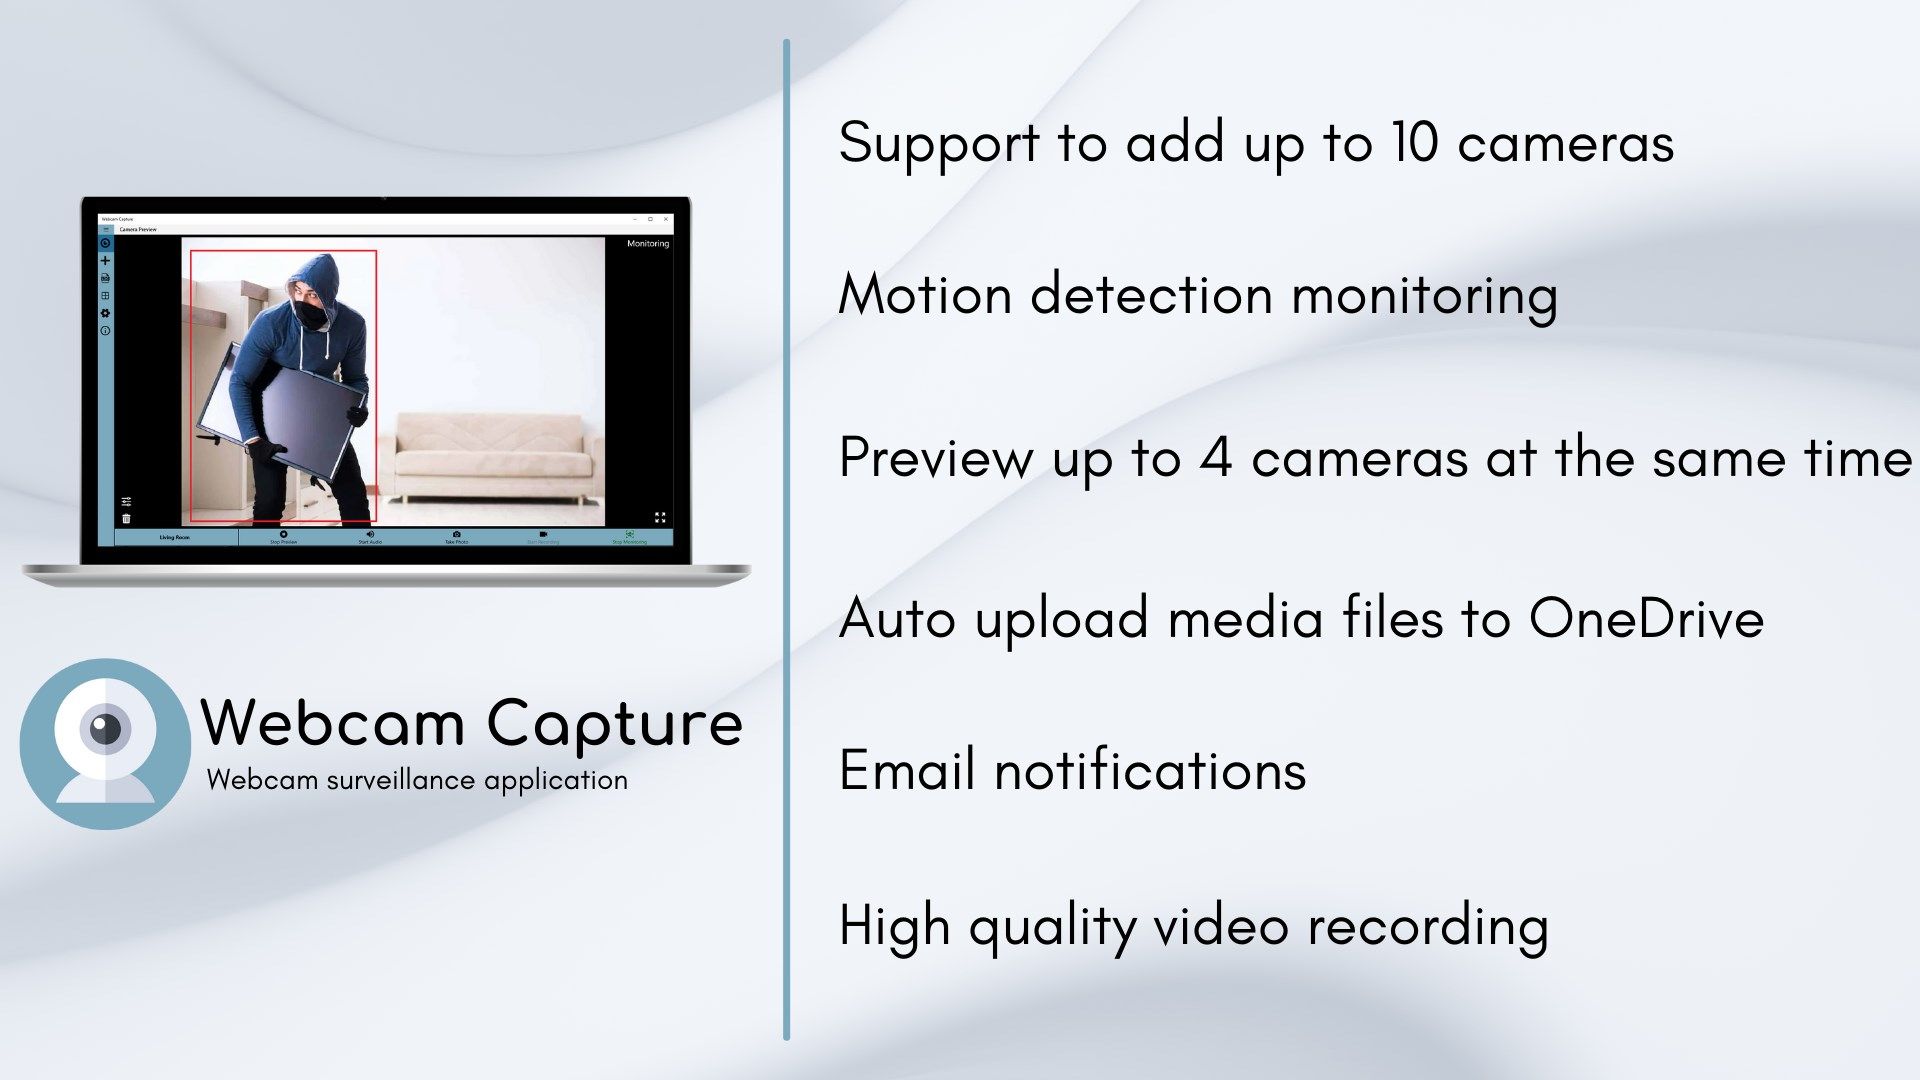 Features of Webcam Capture application